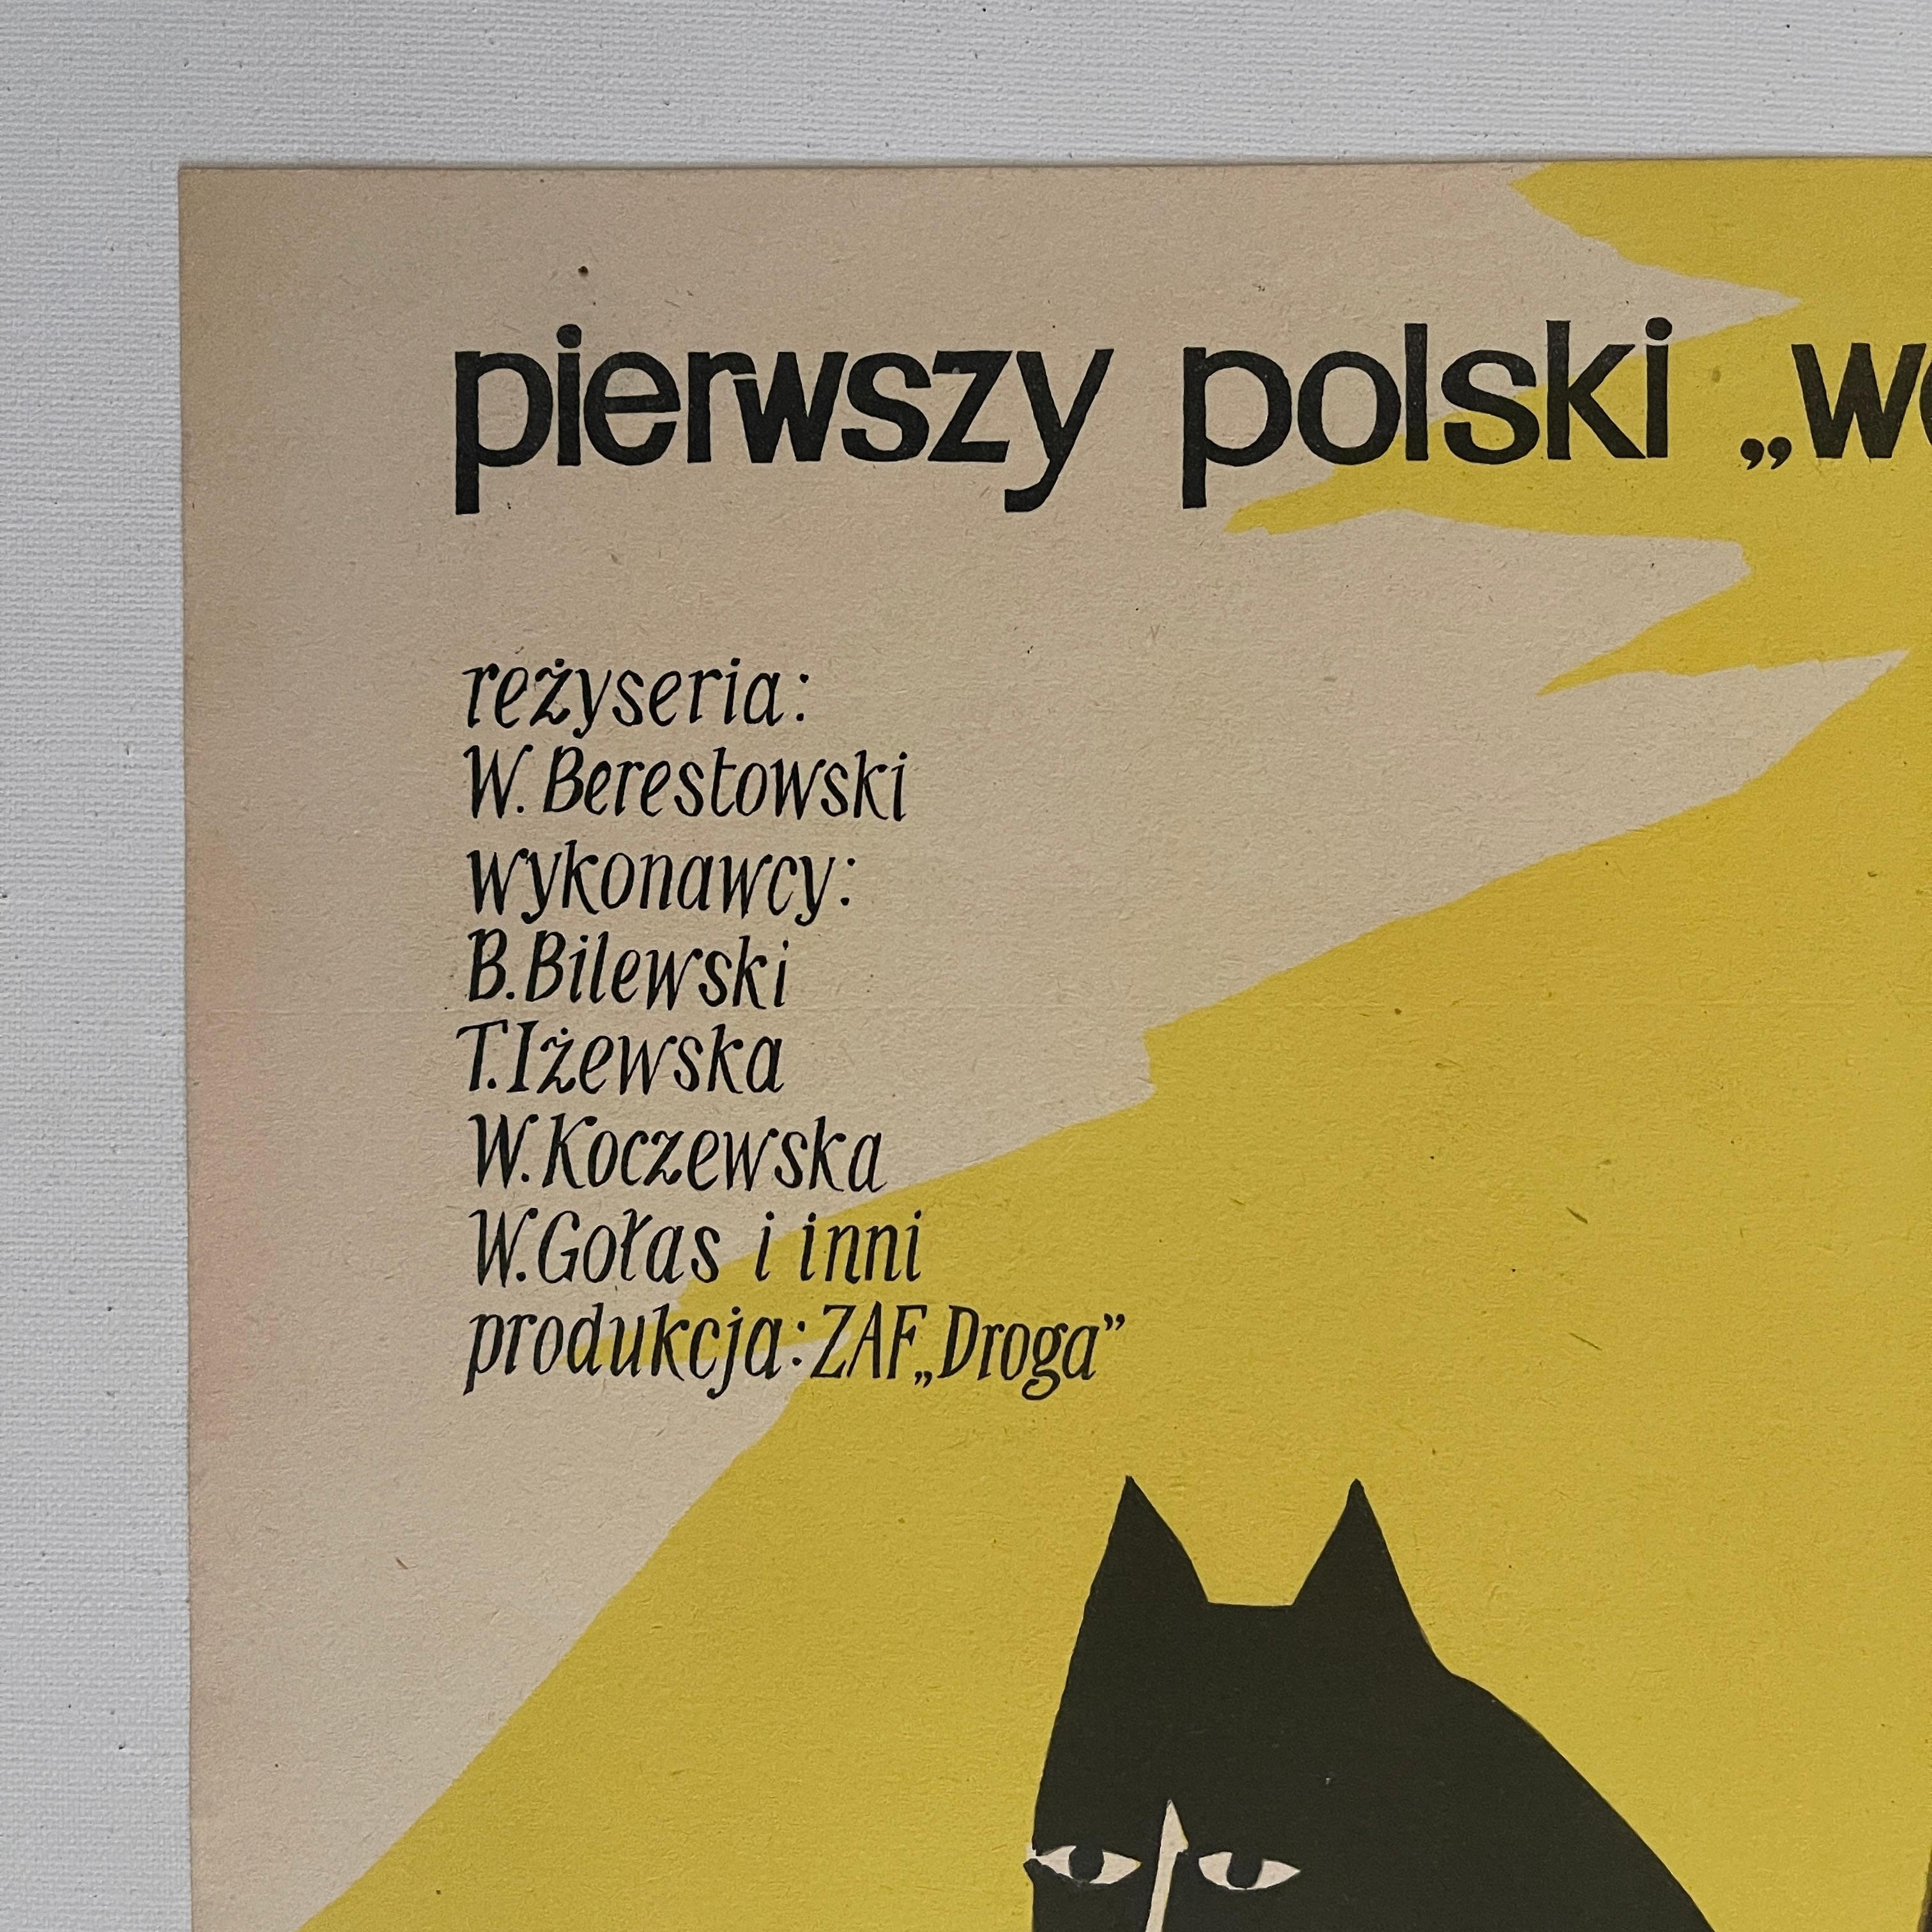 Mid-Century Modern Ranch Texas, Vintage Polish Movie Poster by Jerzy Flisak, 1959 For Sale